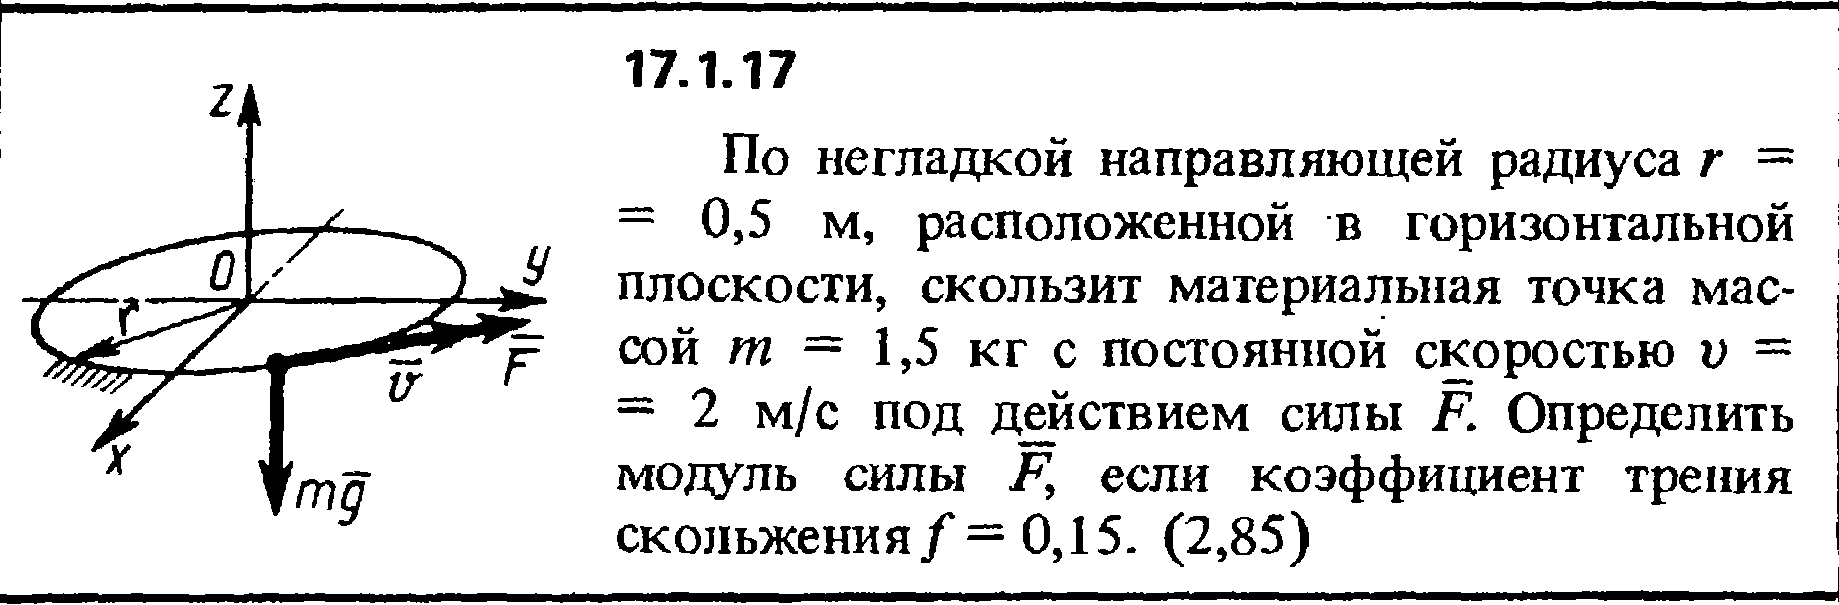 Решение задачи 17.1.17 из сборника Кепе О.Е. 1989 года